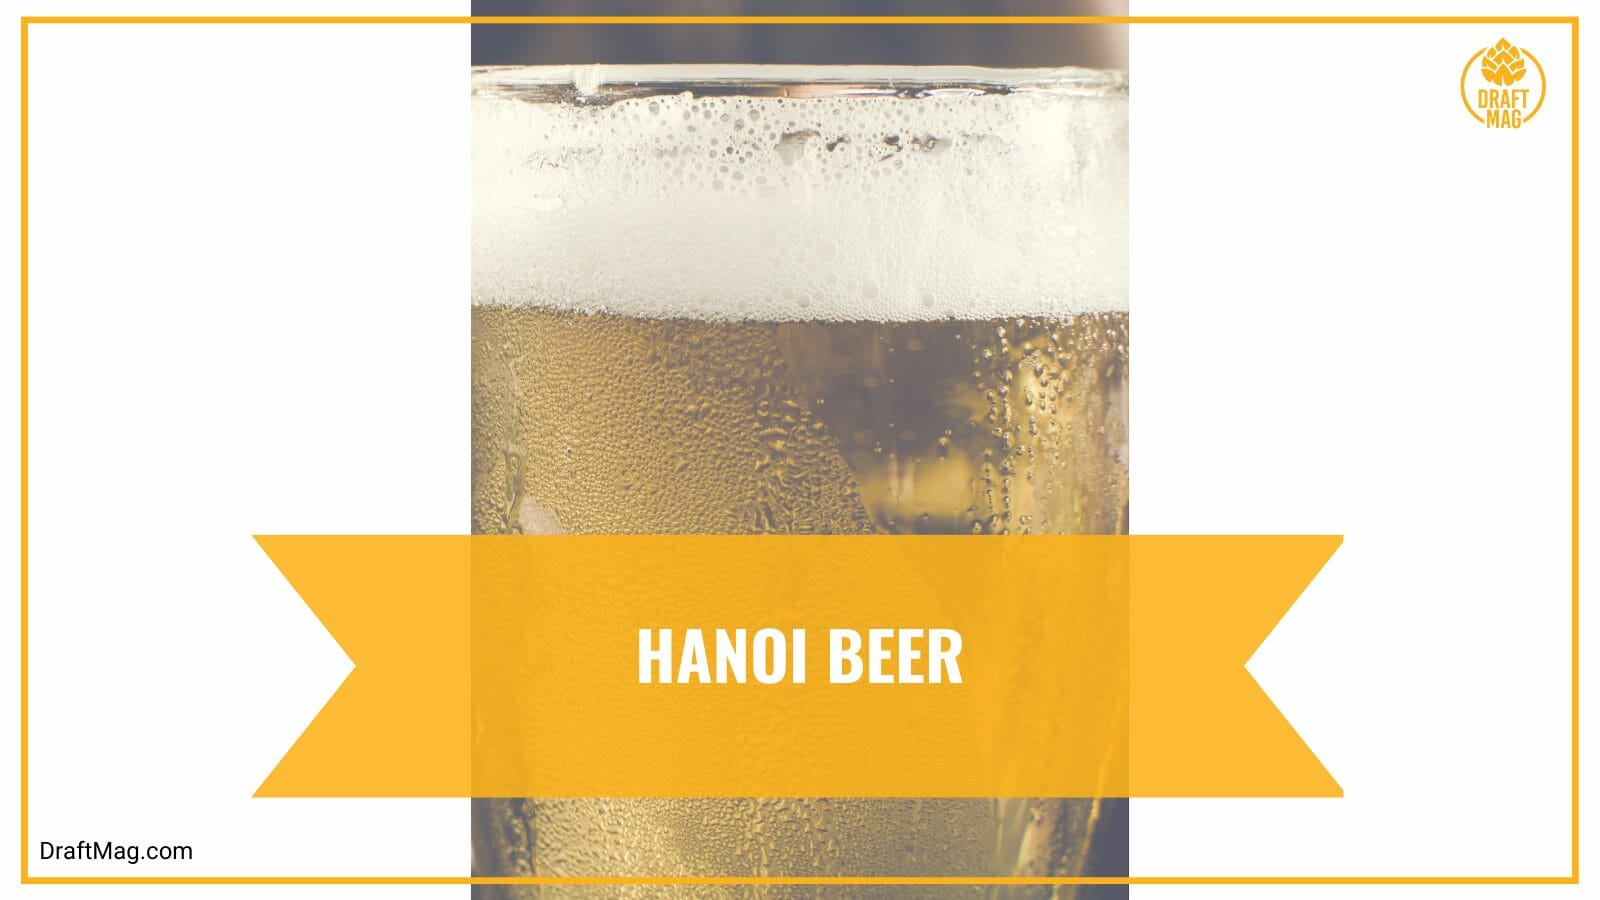 Hanoi beer with honey aroma